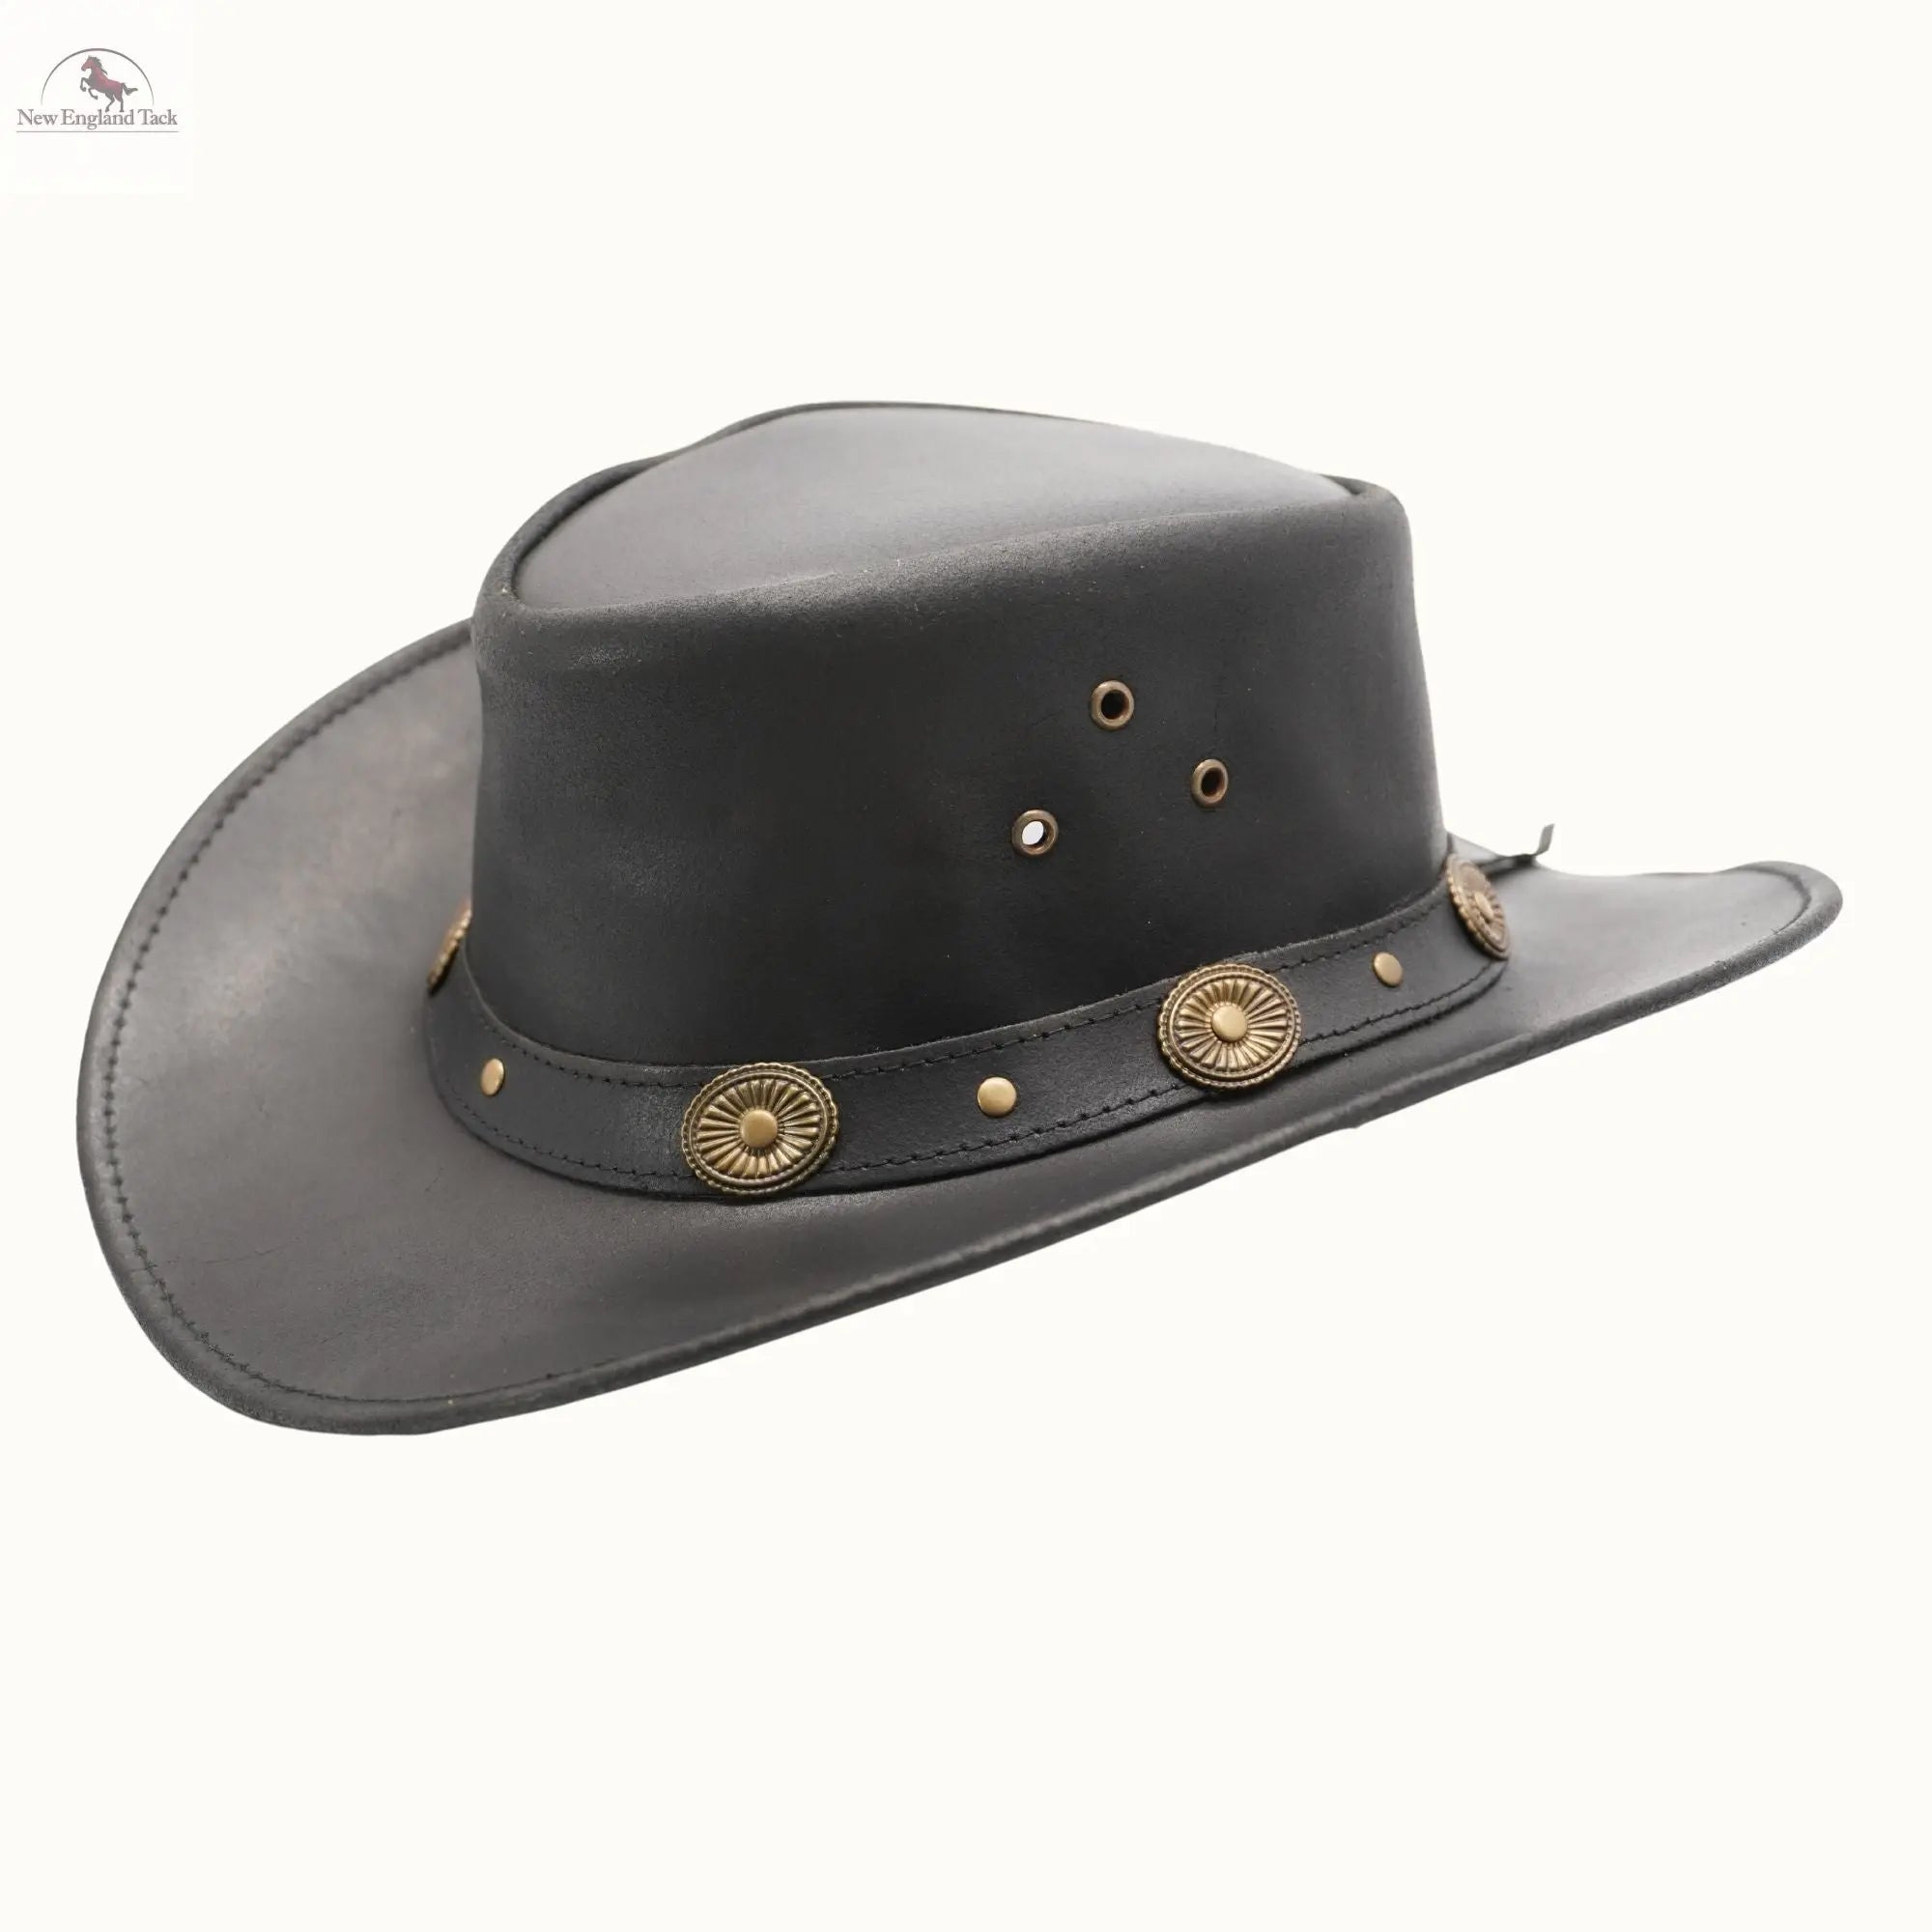 https://cdn.shopify.com/s/files/1/0295/7515/1695/files/Leather-Cowboy-hat-Genuine-leather-Hat-Wide-Brim-western-Hat-Men-Aussie-style-NewEngland-Tack-109259844.jpg?v=1700574429